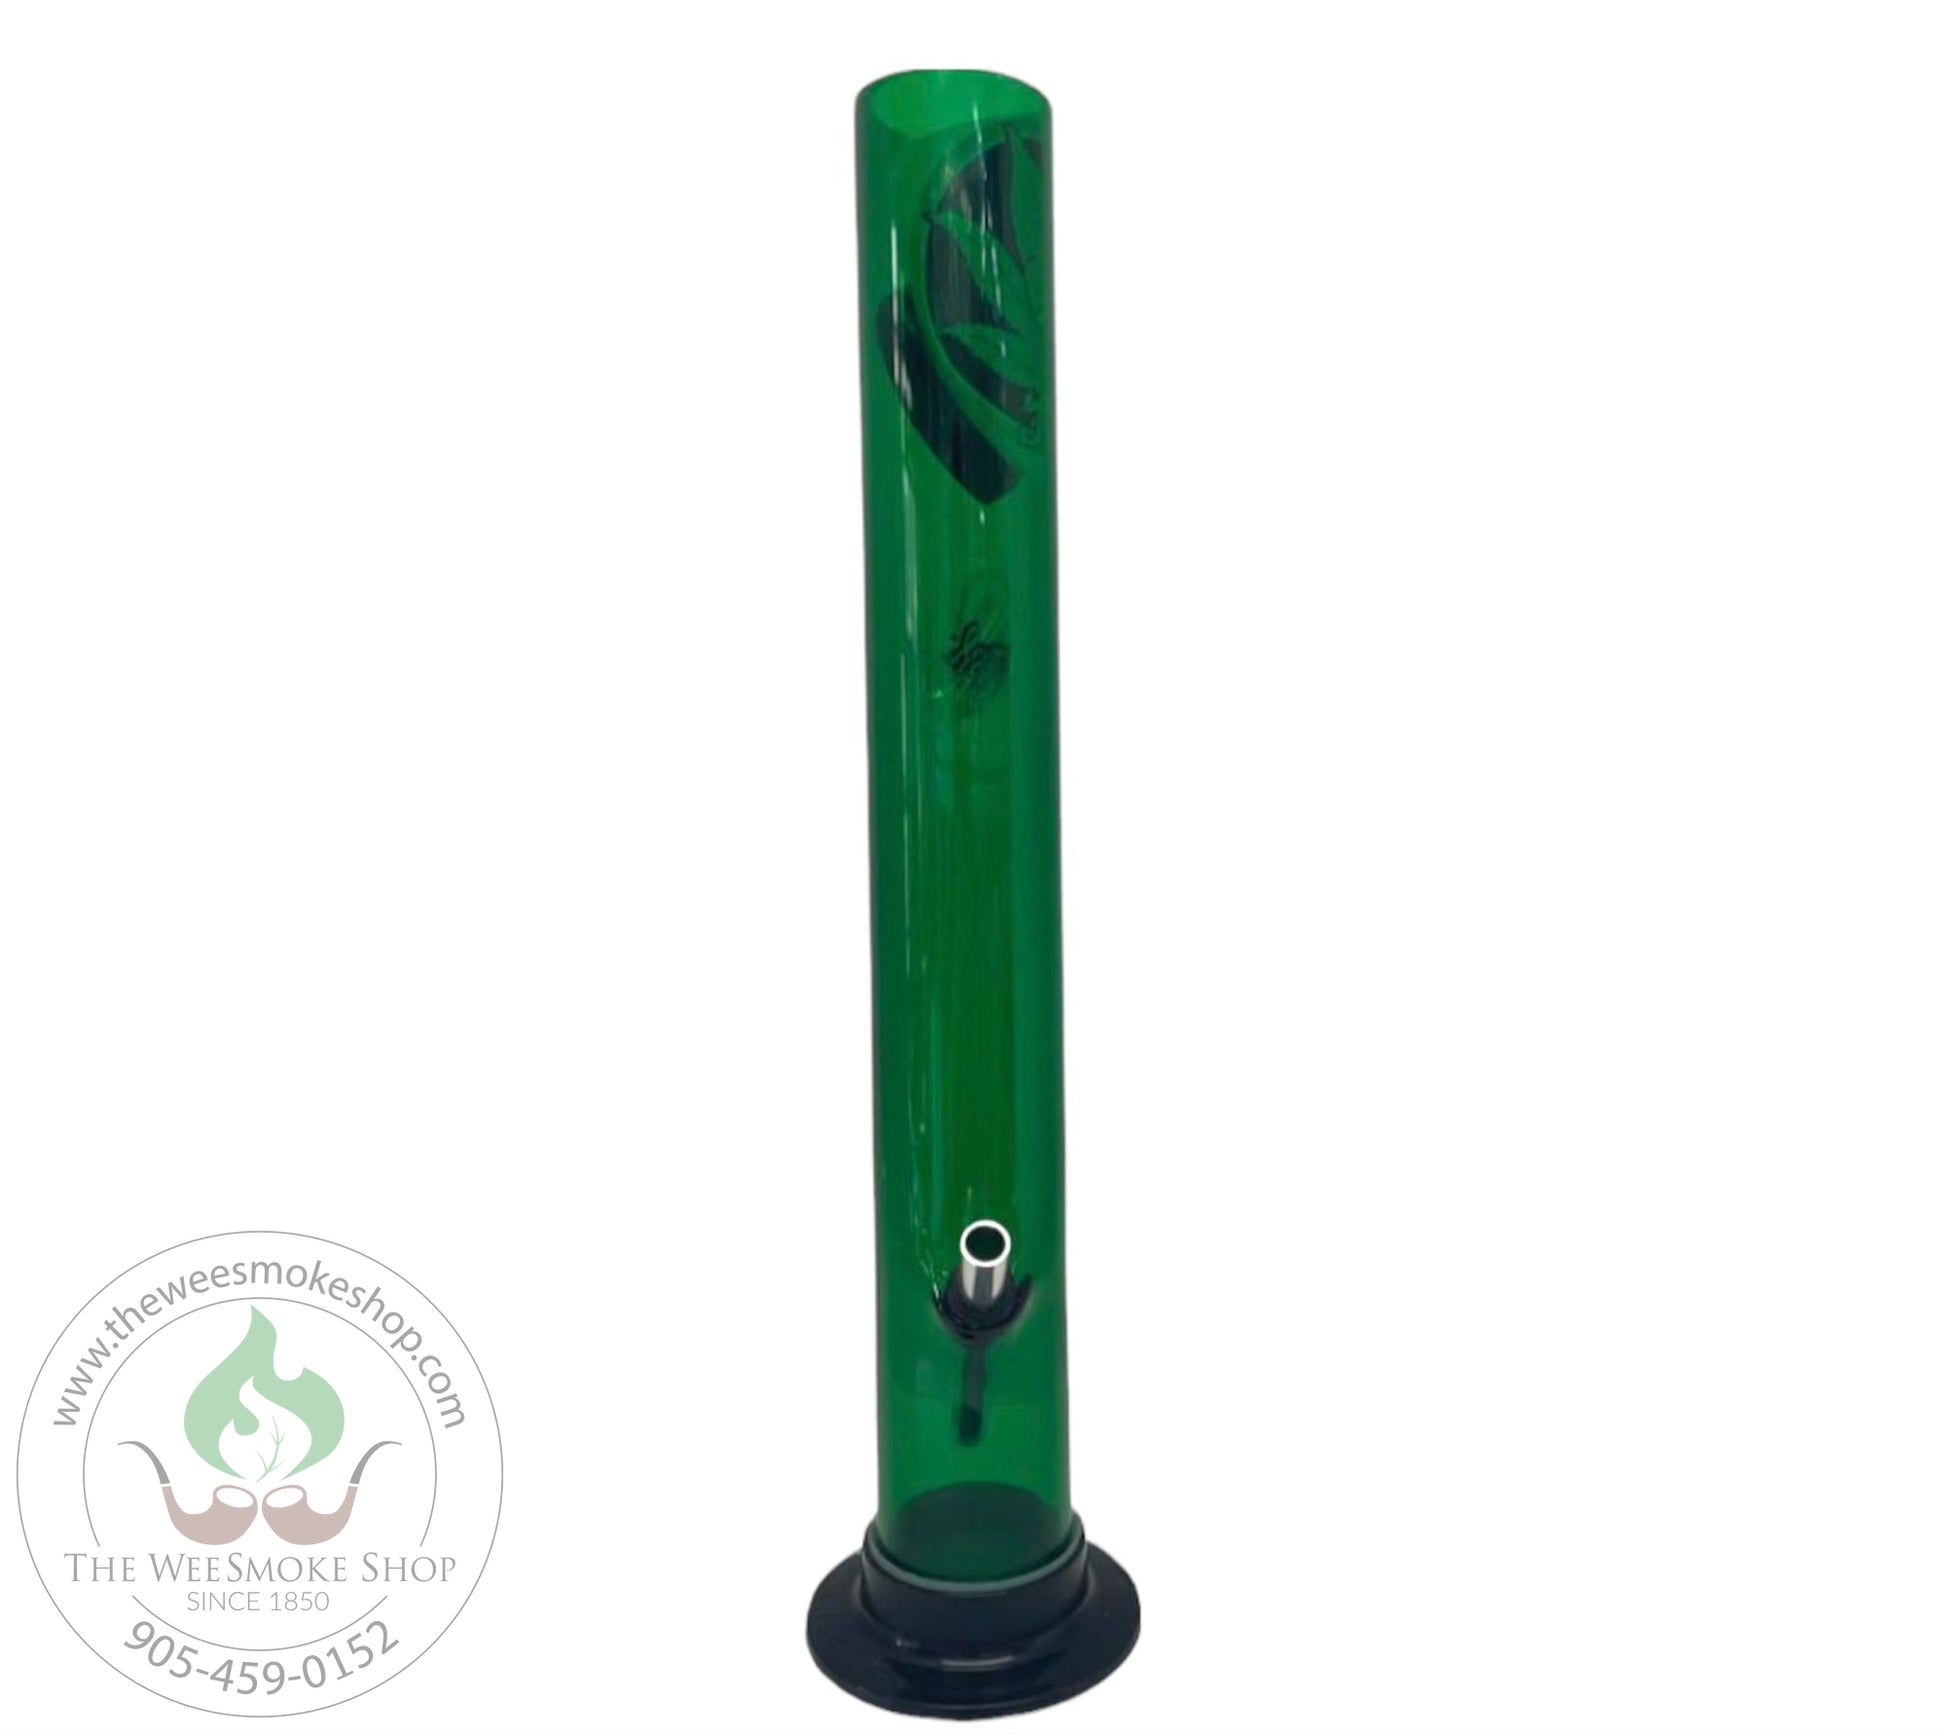 Herbies 15" Acrylic Straight Shooter Bong - Green - The Wee Smoke Shop